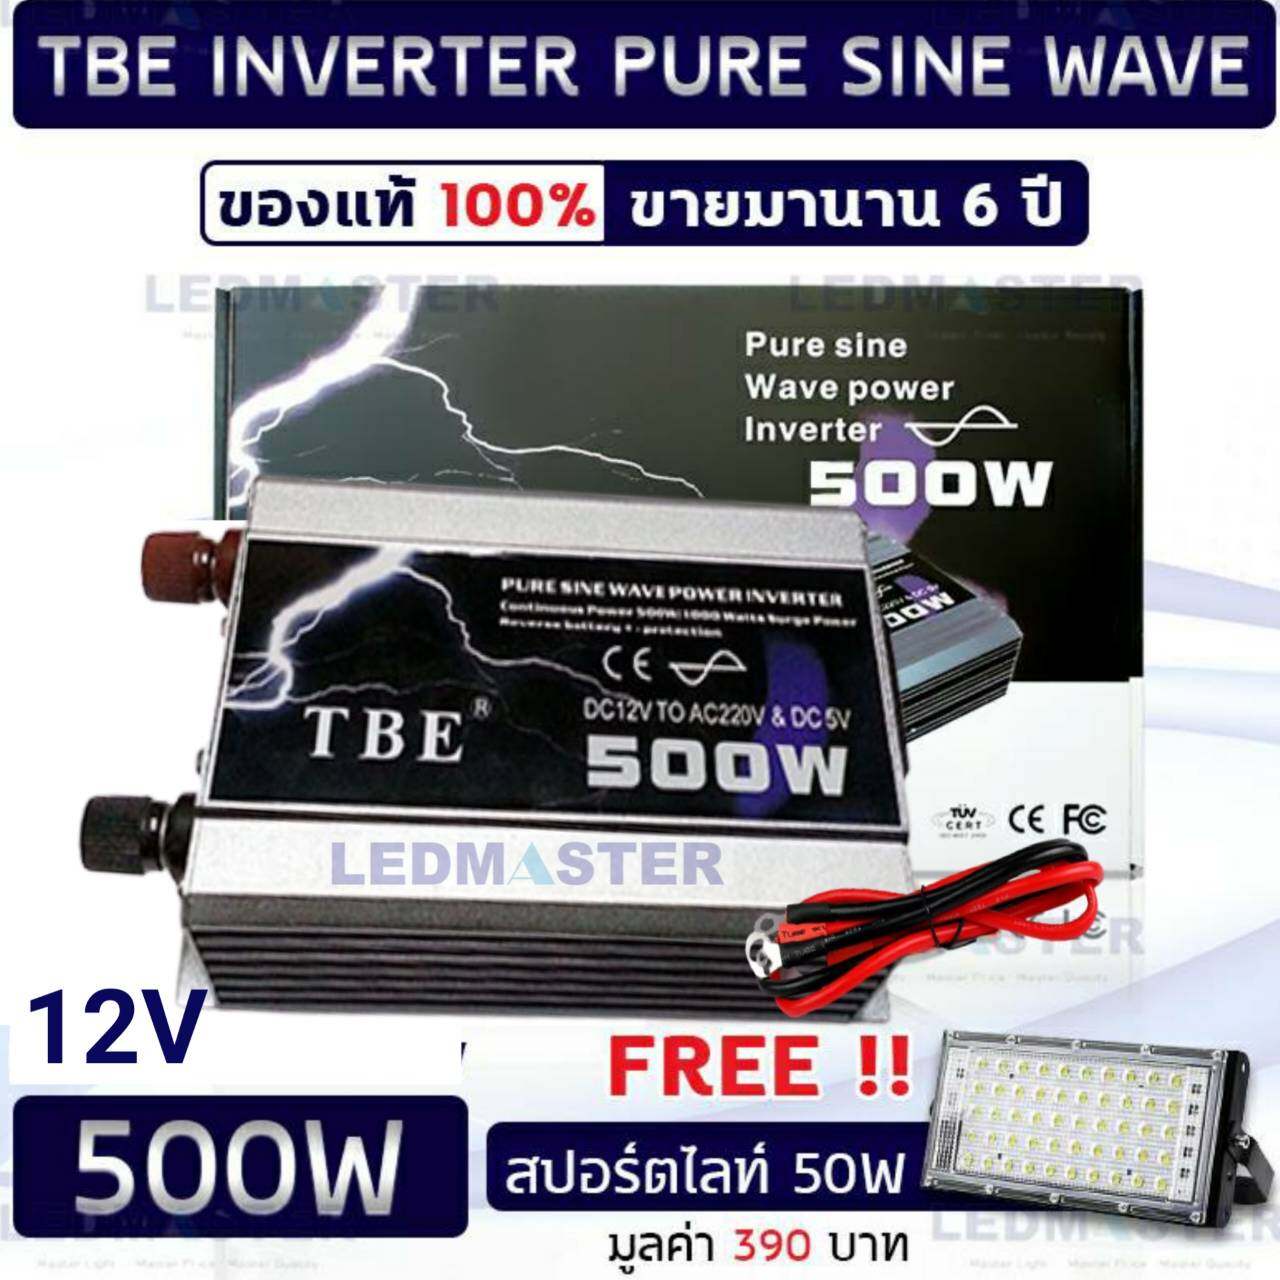 TBE inverter pure sine wave power inverter 500W 12V เครื่องแปลงไฟ อินเวอร์เตอร์ / inverter tbe ชนิด pure sine wave ขนาด 500 วัตต์ 12V เเปลงไฟจากเเบตเตอรี่รถยนต์เป็นไฟบ้าน